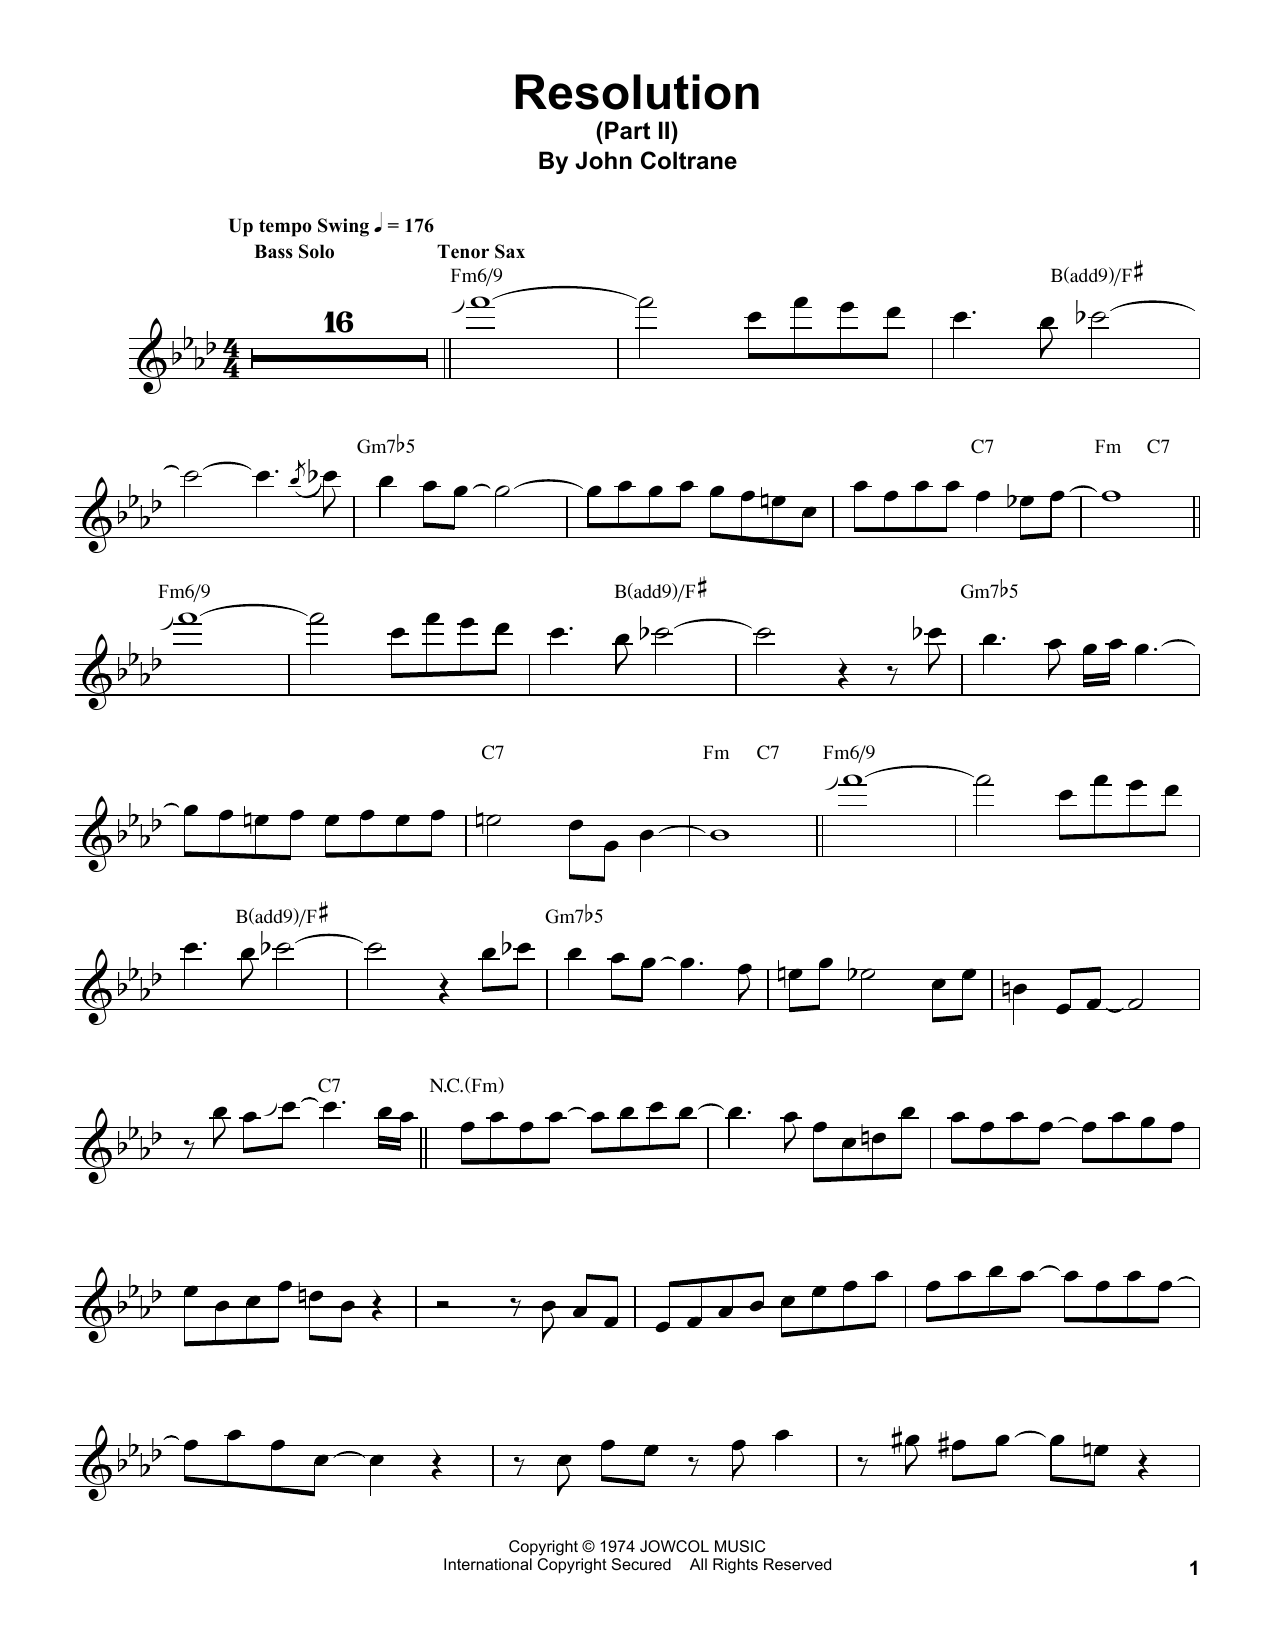 John Coltrane Resolution (Part II) Sheet Music Notes & Chords for Tenor Sax Transcription - Download or Print PDF